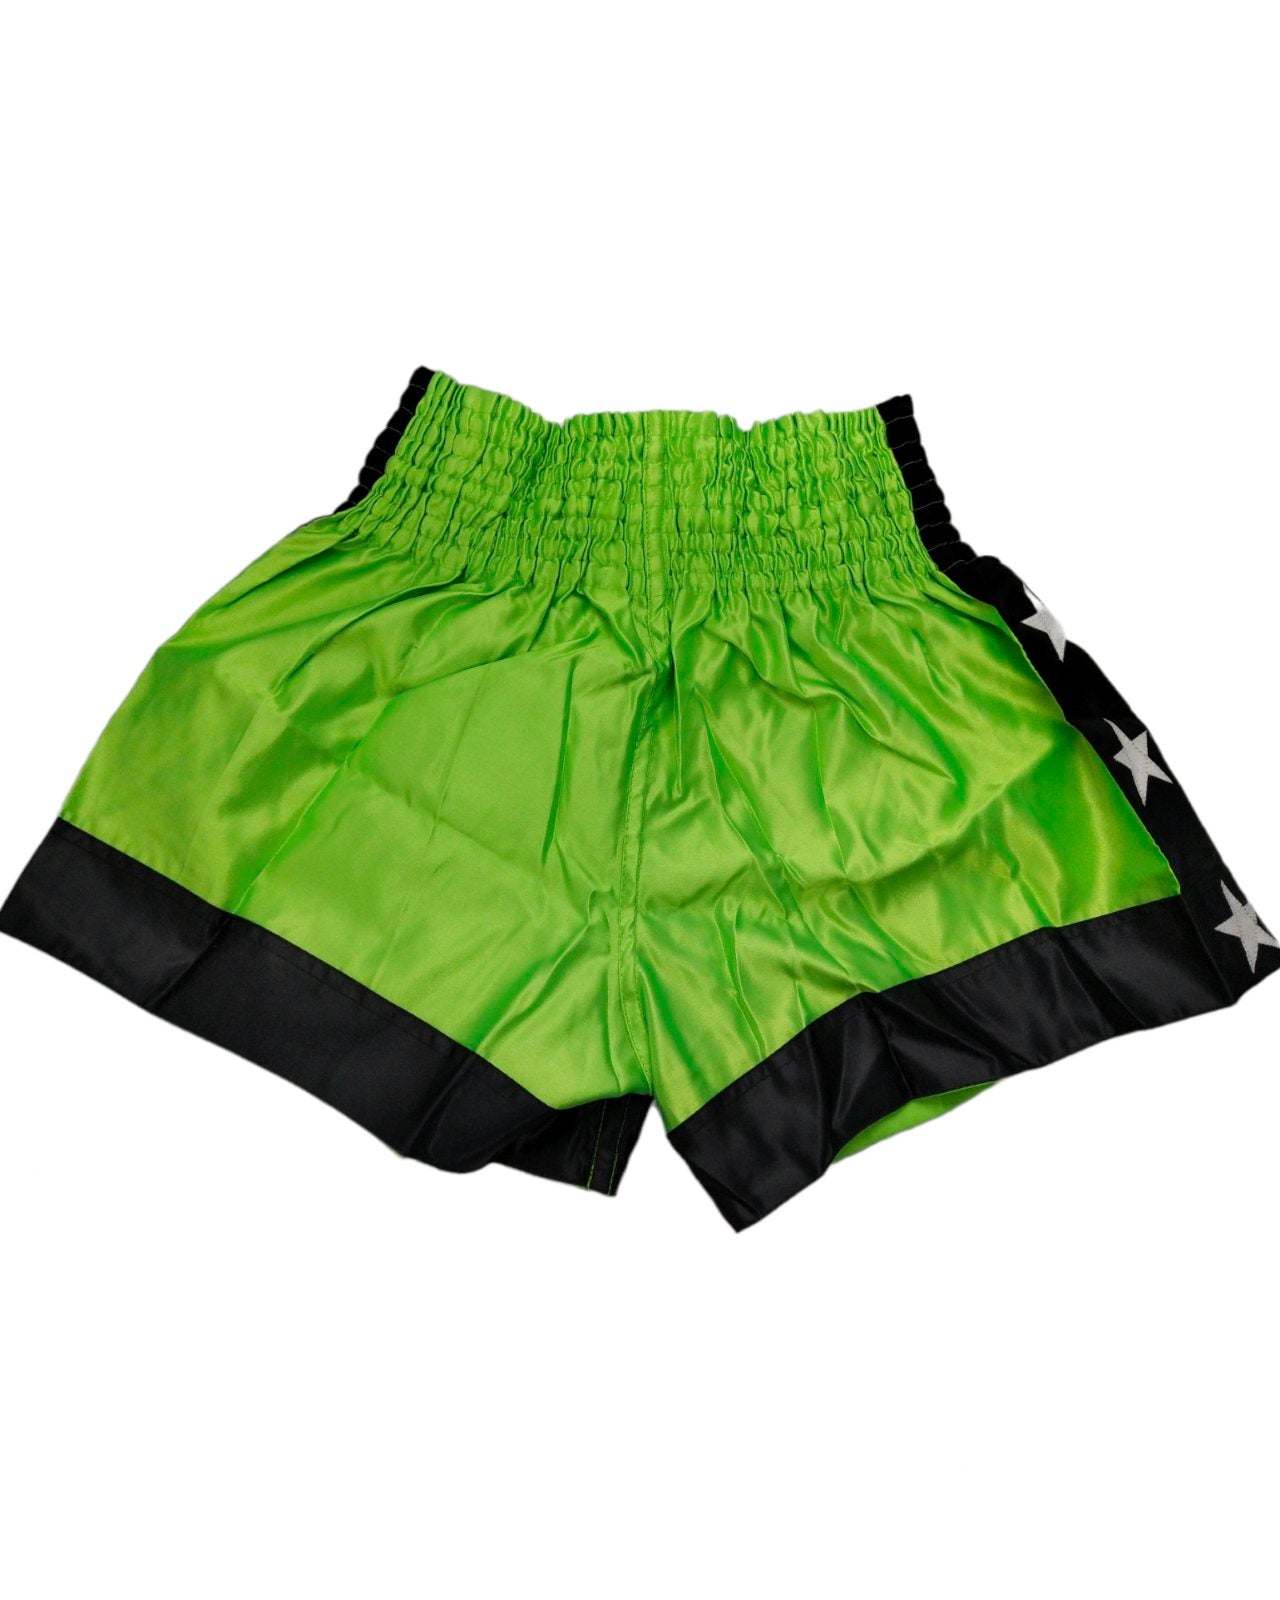 K-1 Muaythai Fight Shorts [Neon Green]